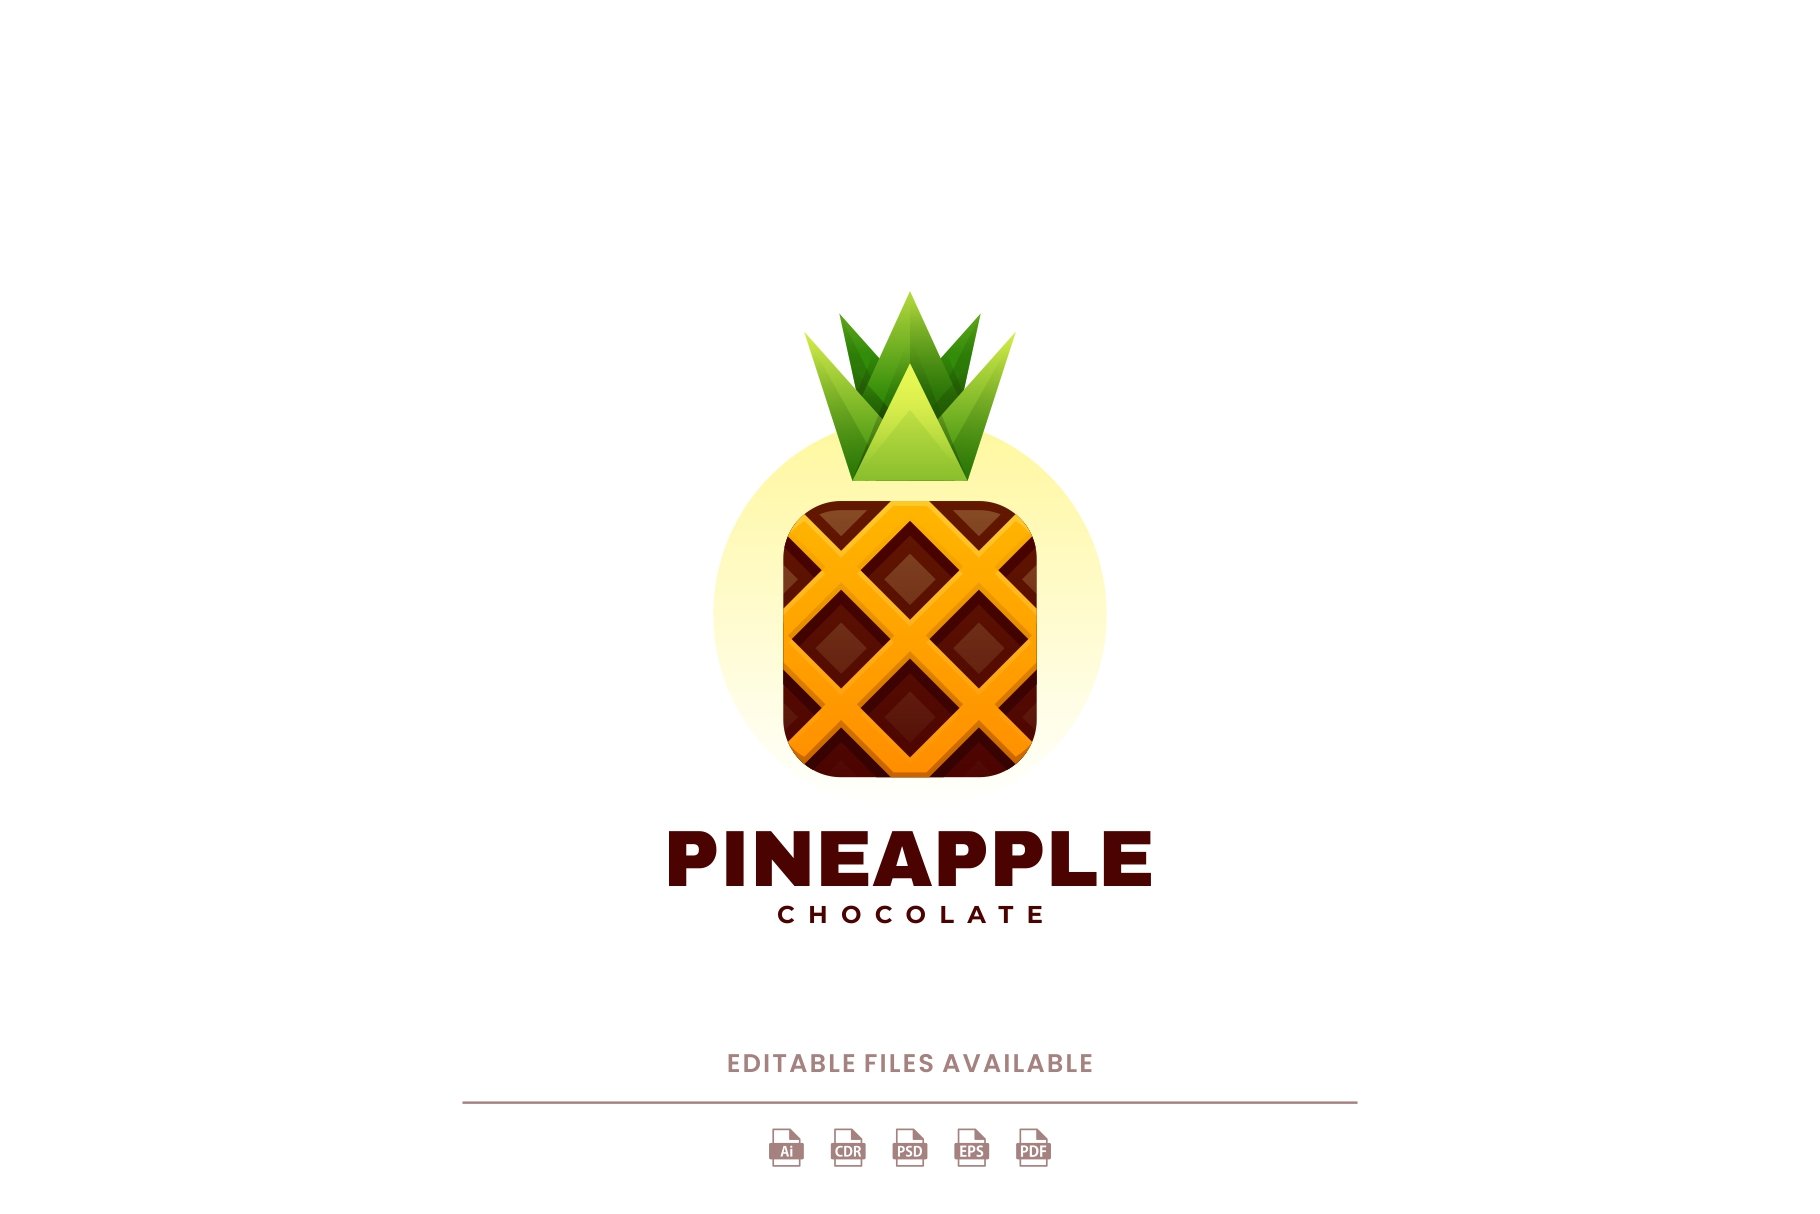 Pineapple Gradient Logo cover image.